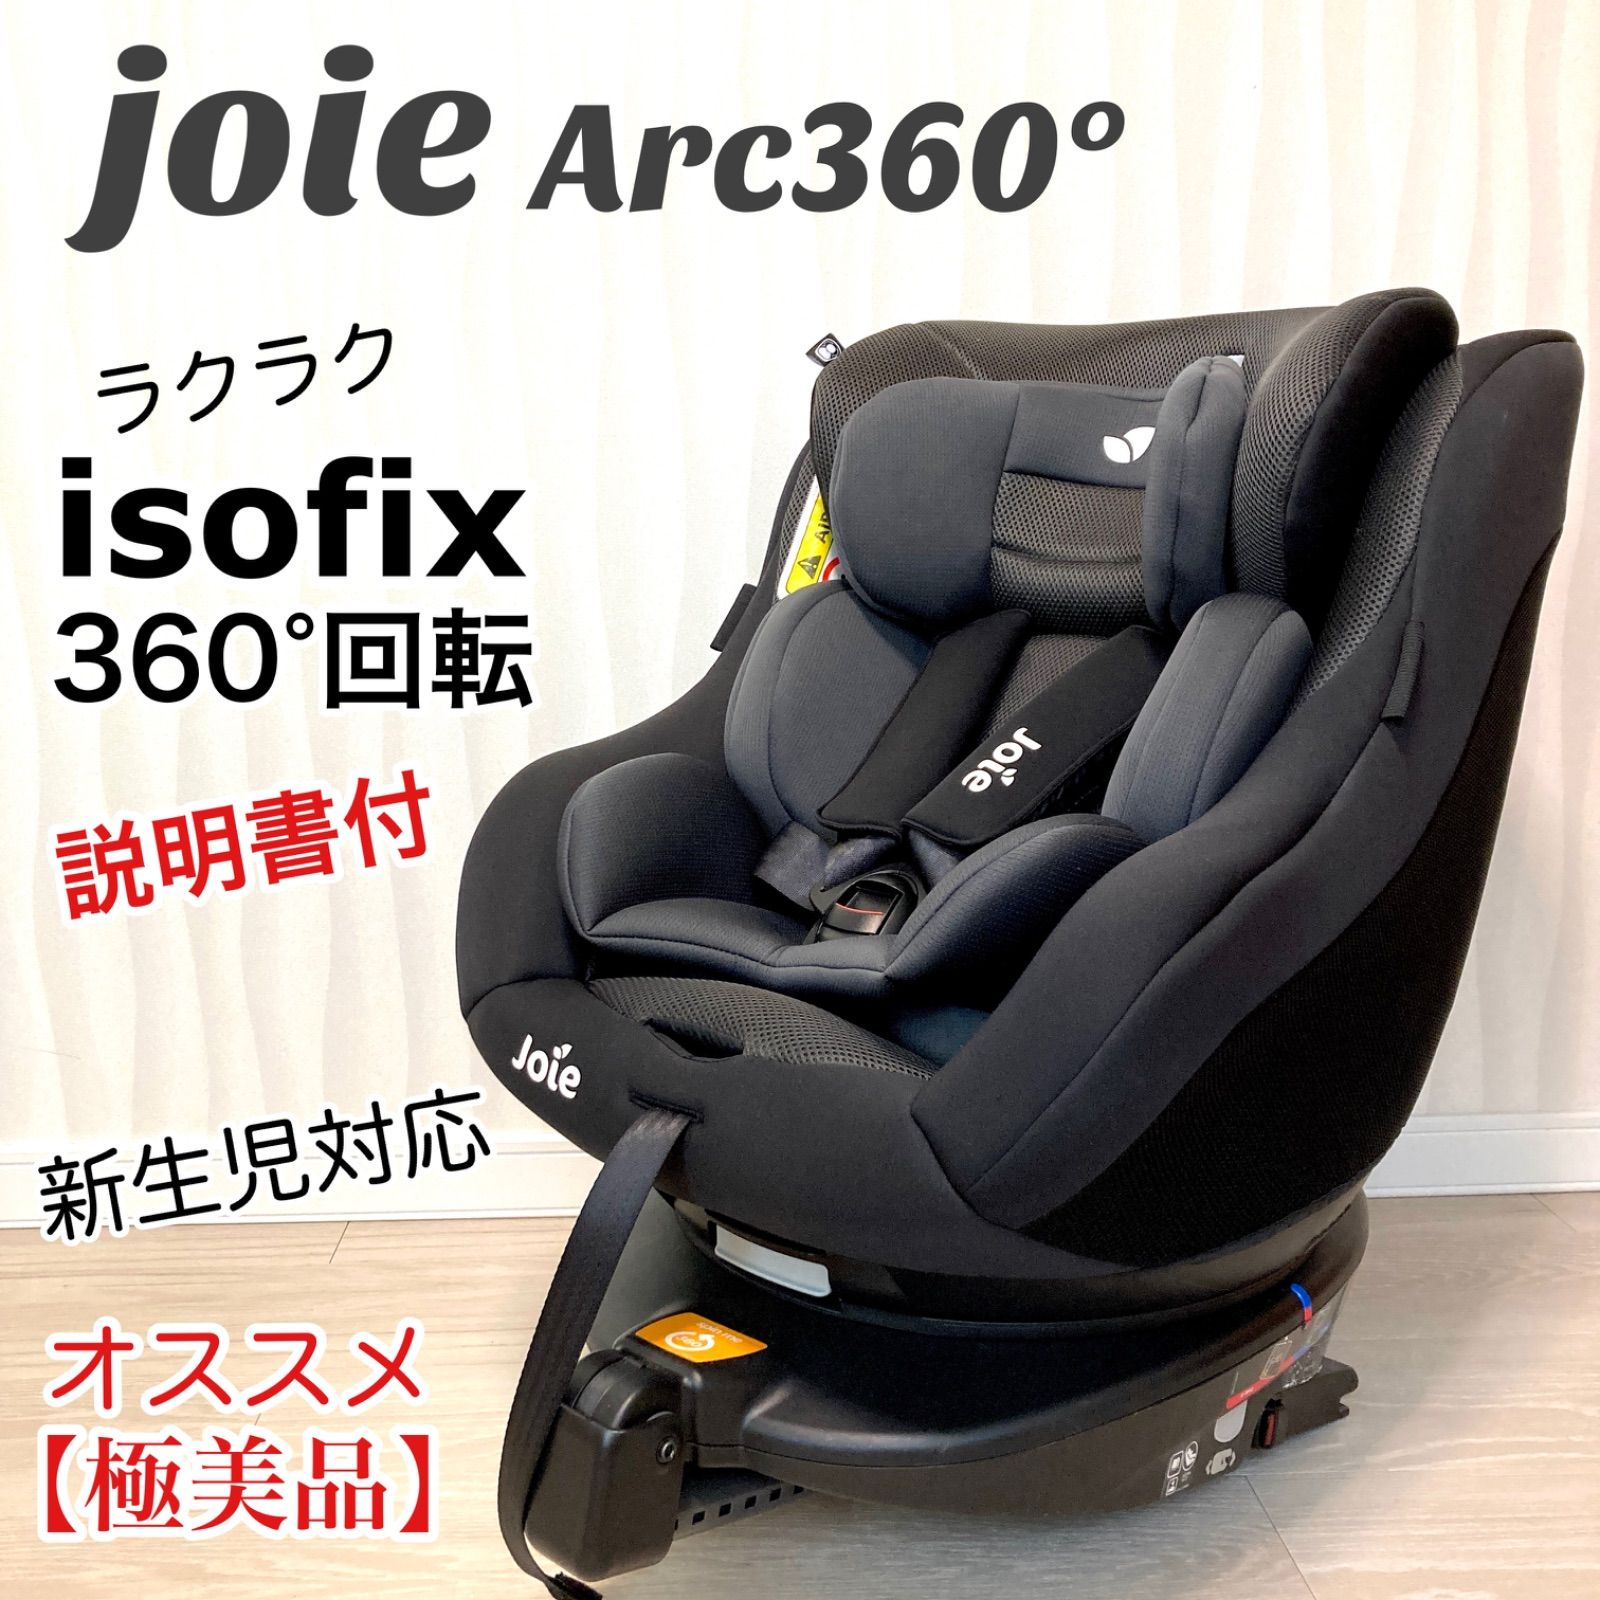 Joie Arc360° ISOFIX対応 チャイルドシート - チャイルドシート